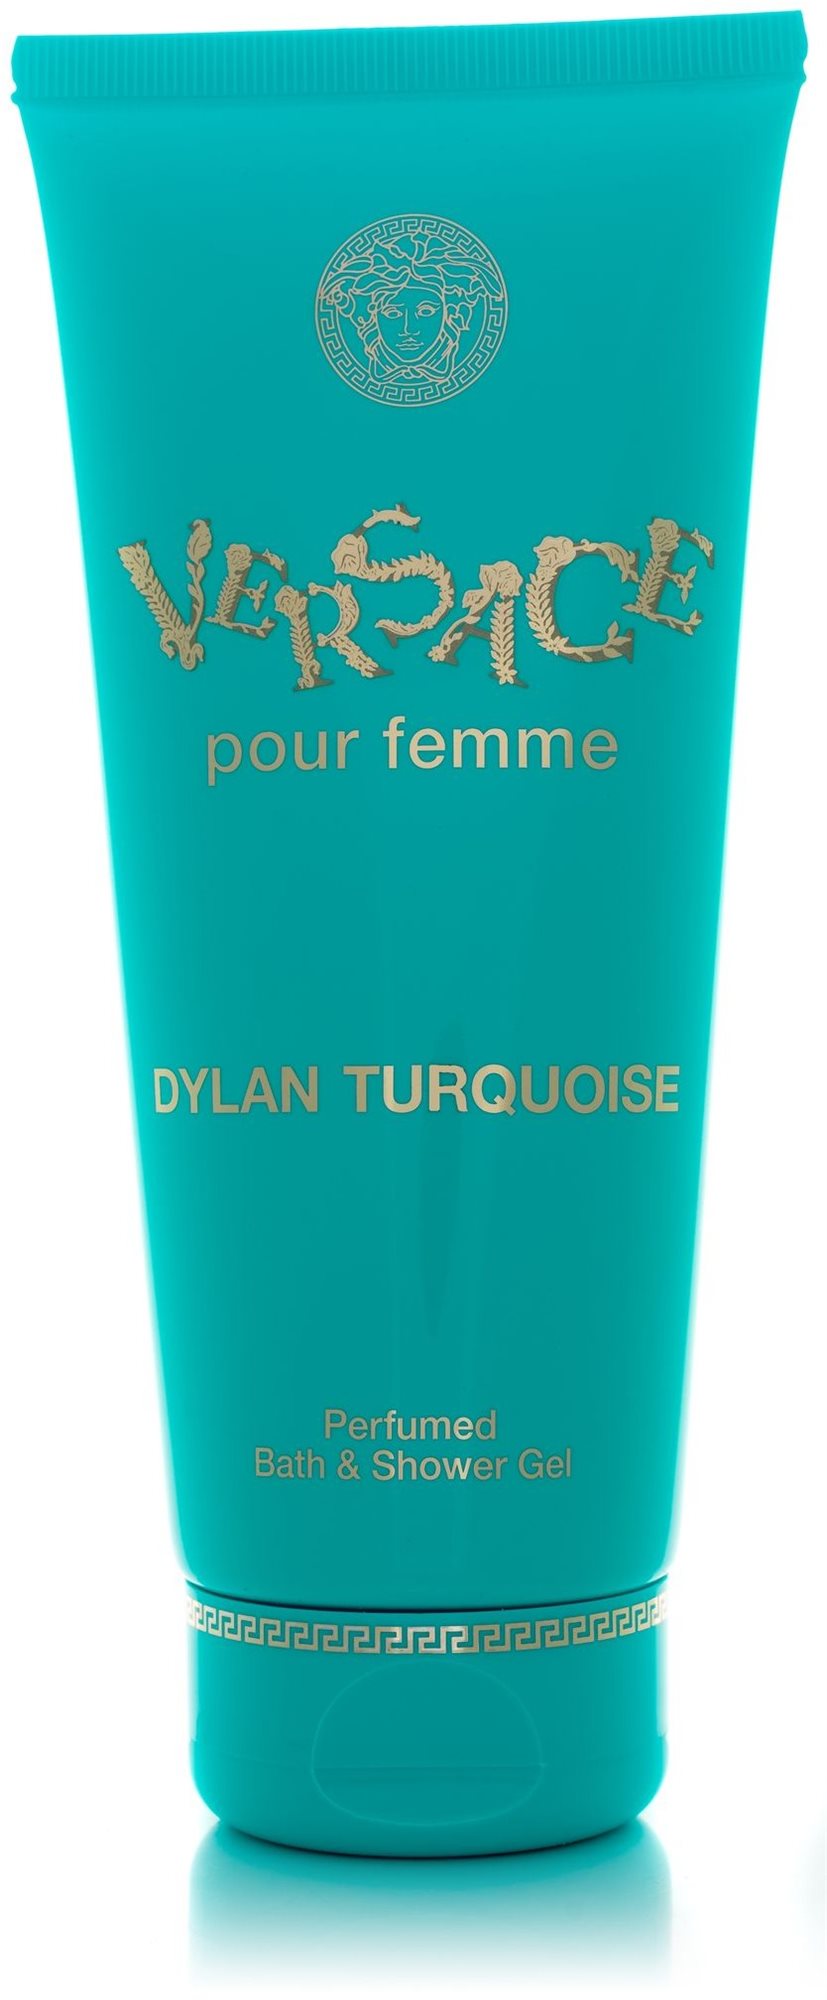 VERSACE Dylan Turquoise Bath & Shower Gel 200 ml